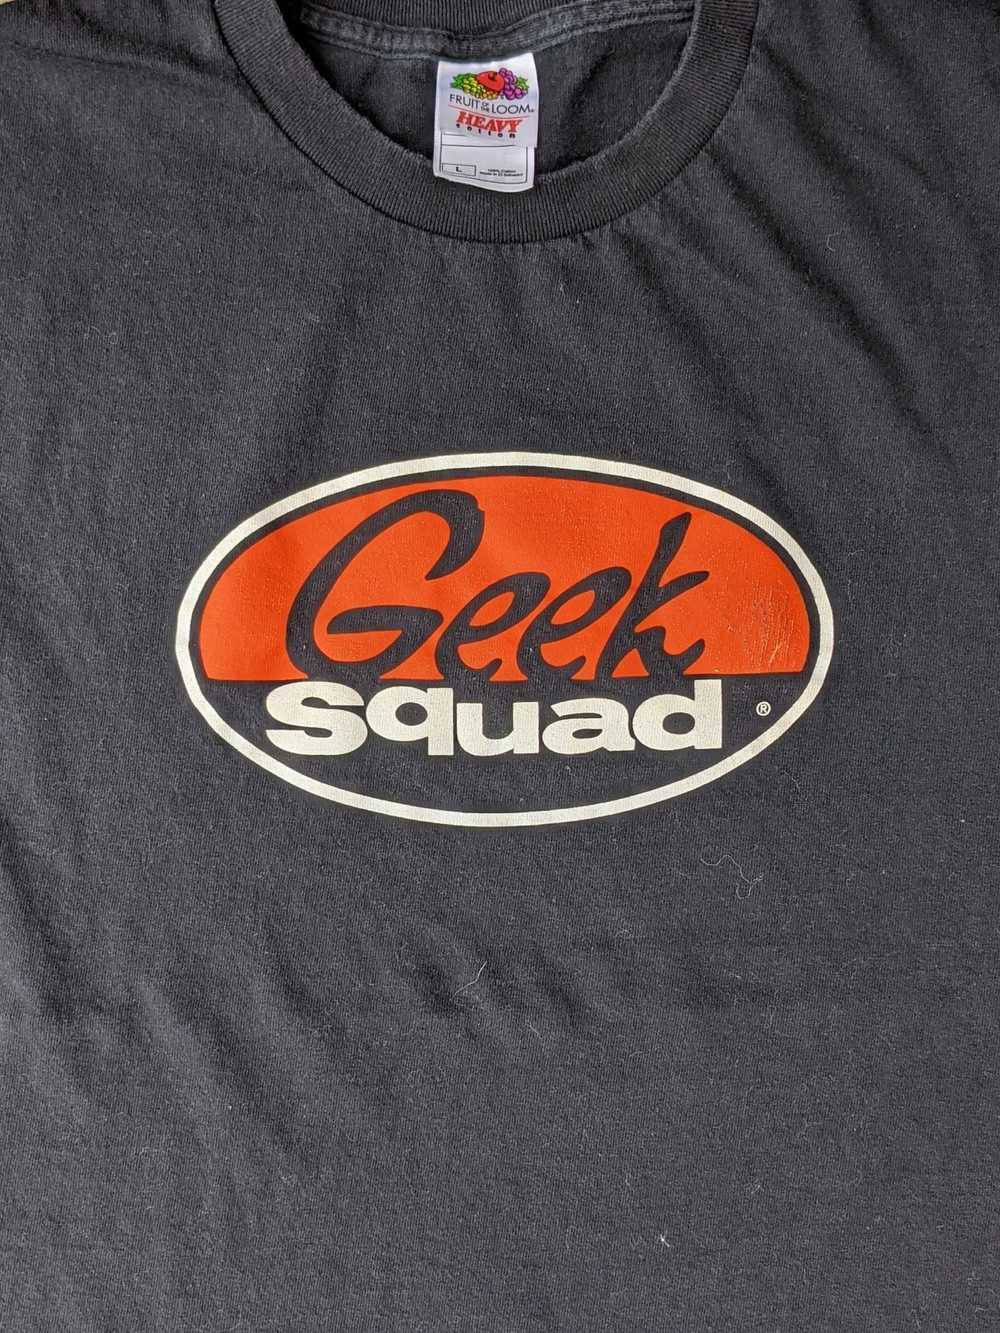 Vintage Vintage Best Buy Geek Squad t-shirt - image 2